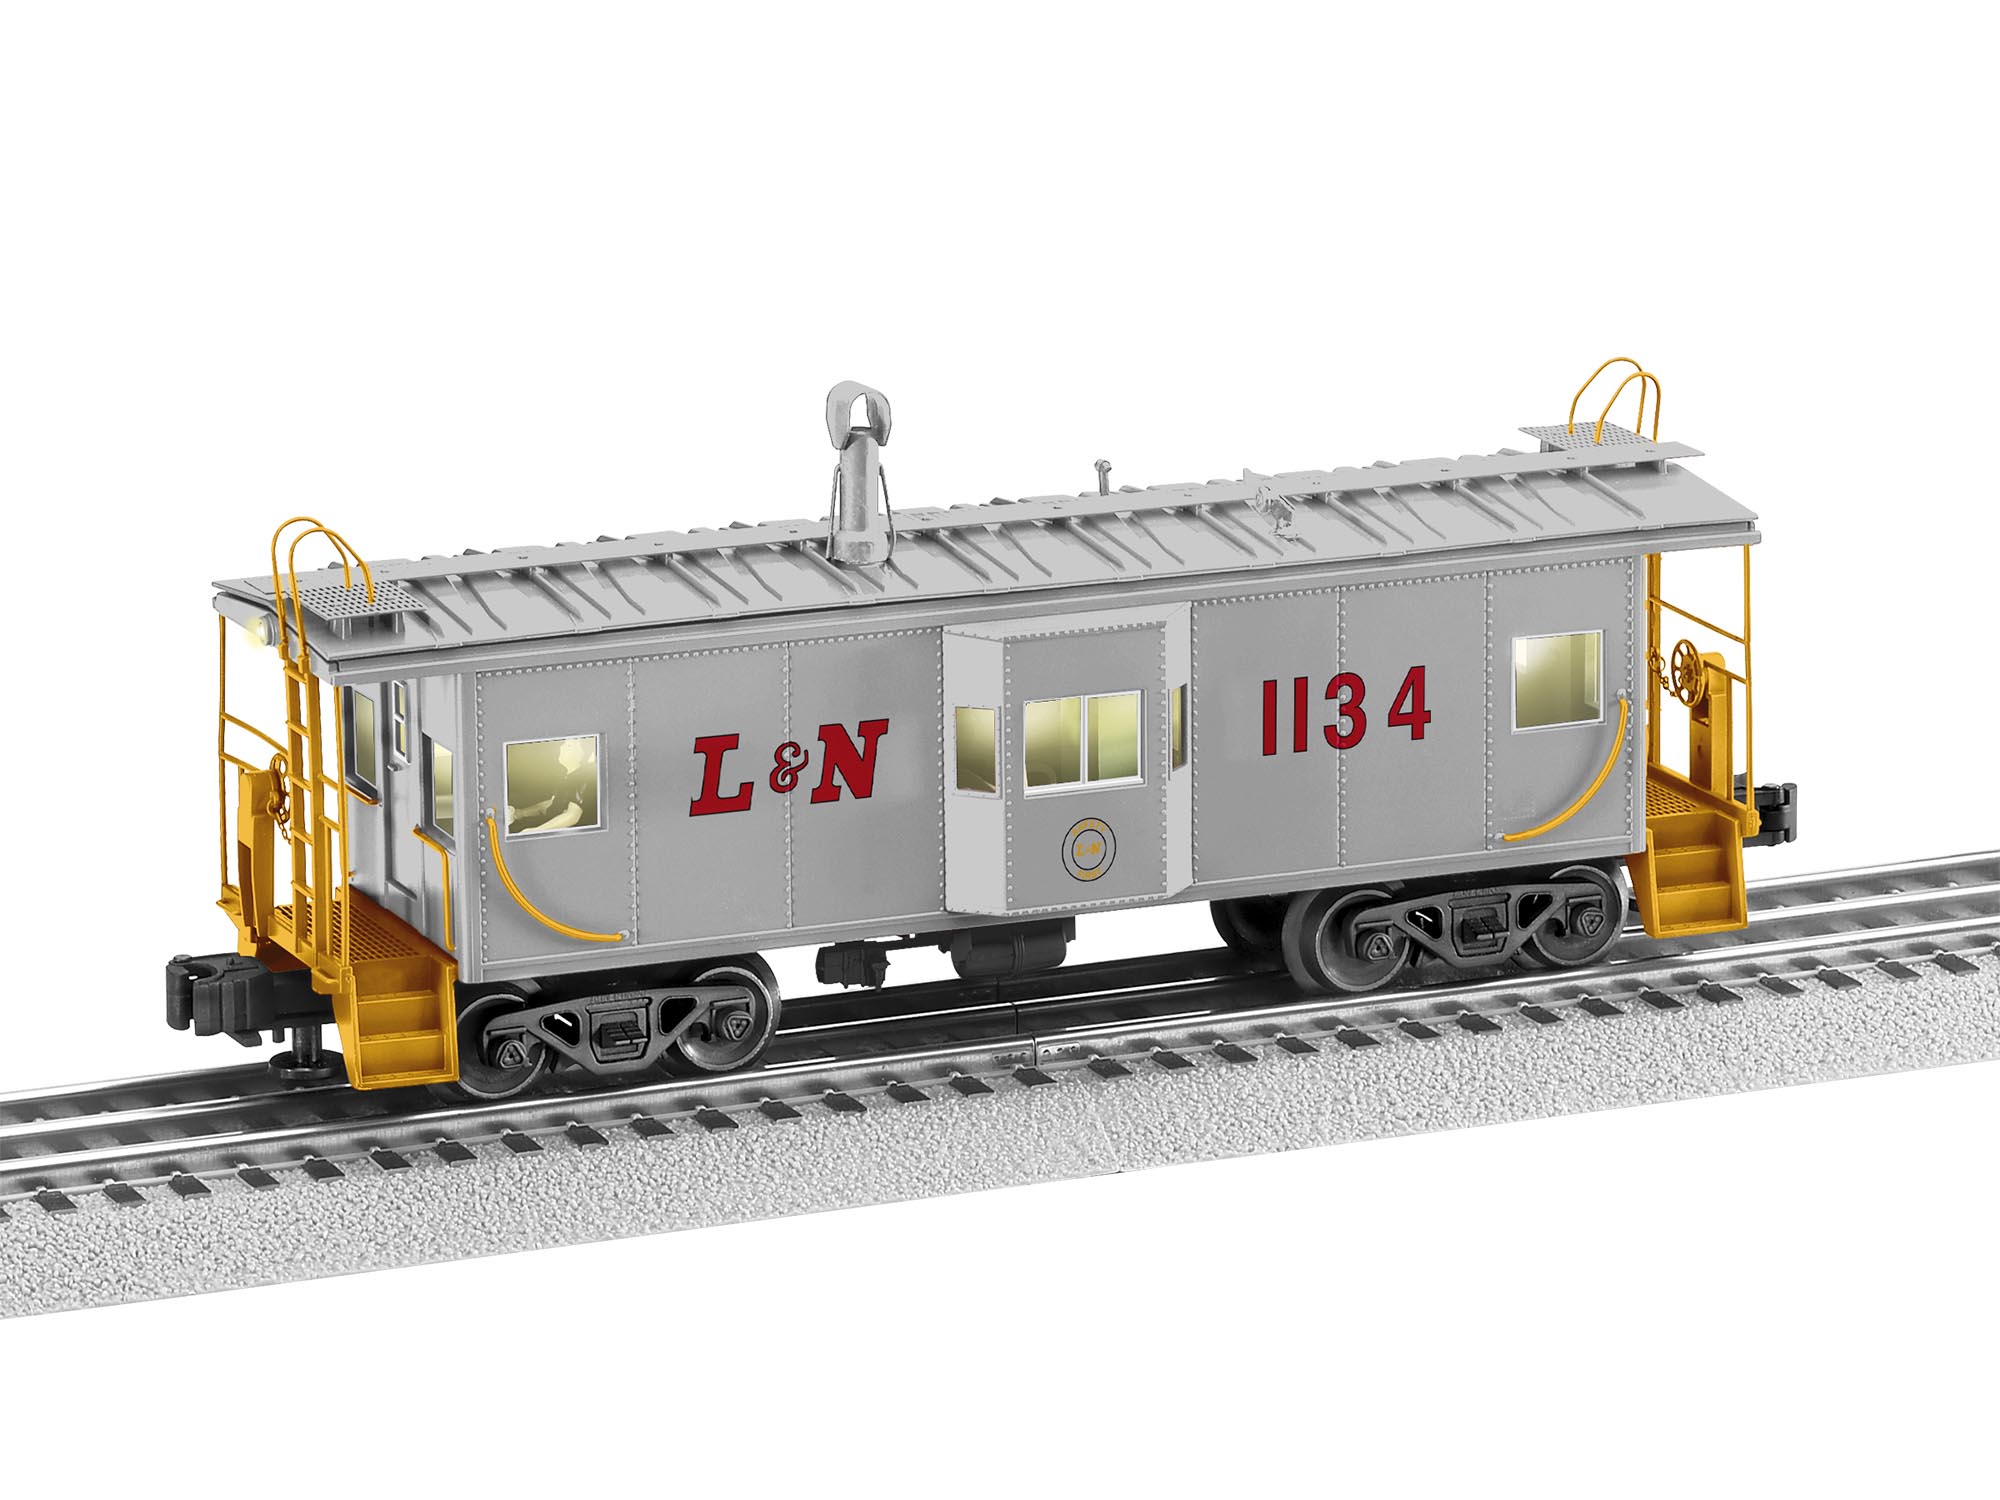 Details about   Lionel Trains Atlantic Coast Line Caboose w/Bay Window Lighte  NEW w/Outer Box 